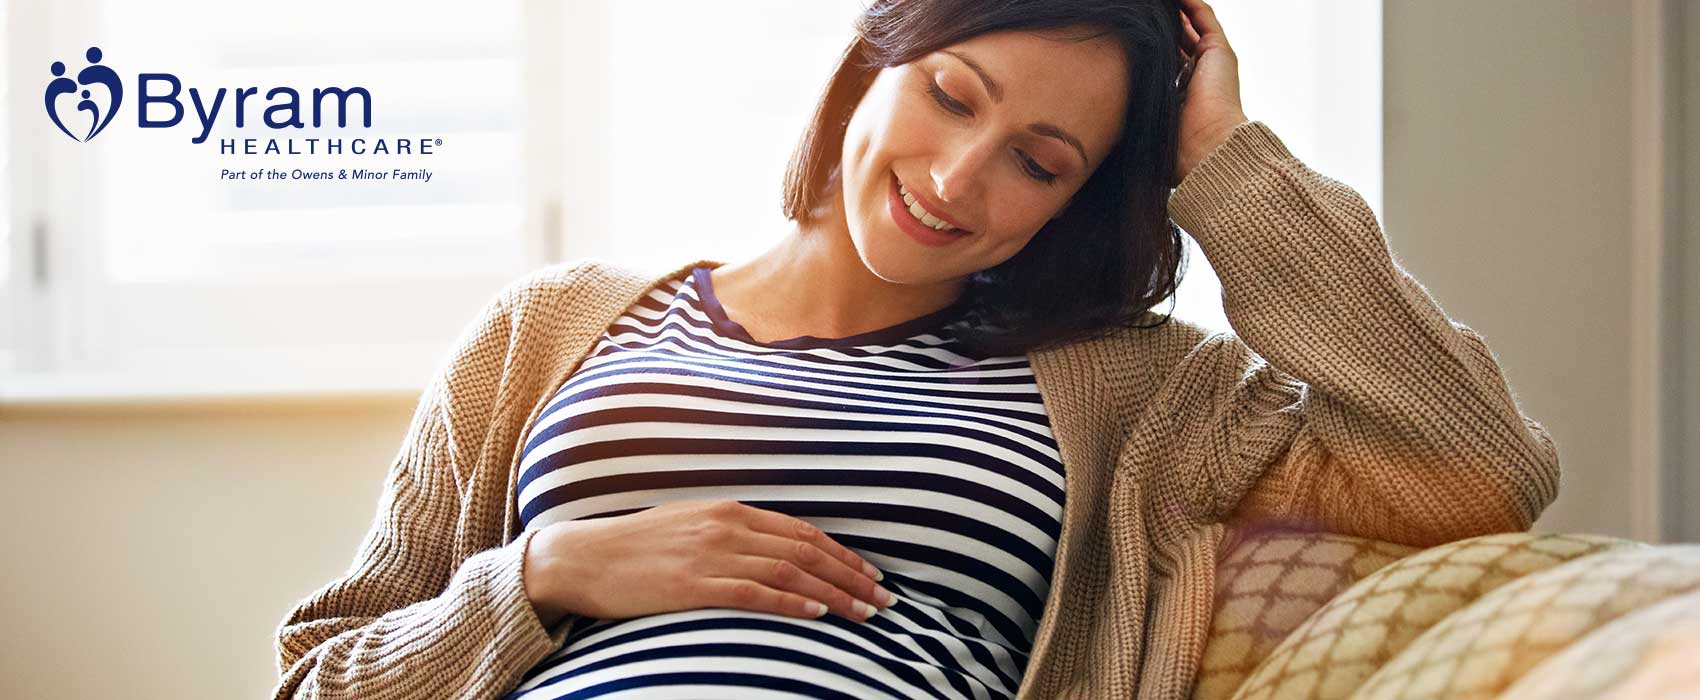 ToughMomma Marin Pelvic Support Binder – ToughMomma Maternity & Nursing Wear